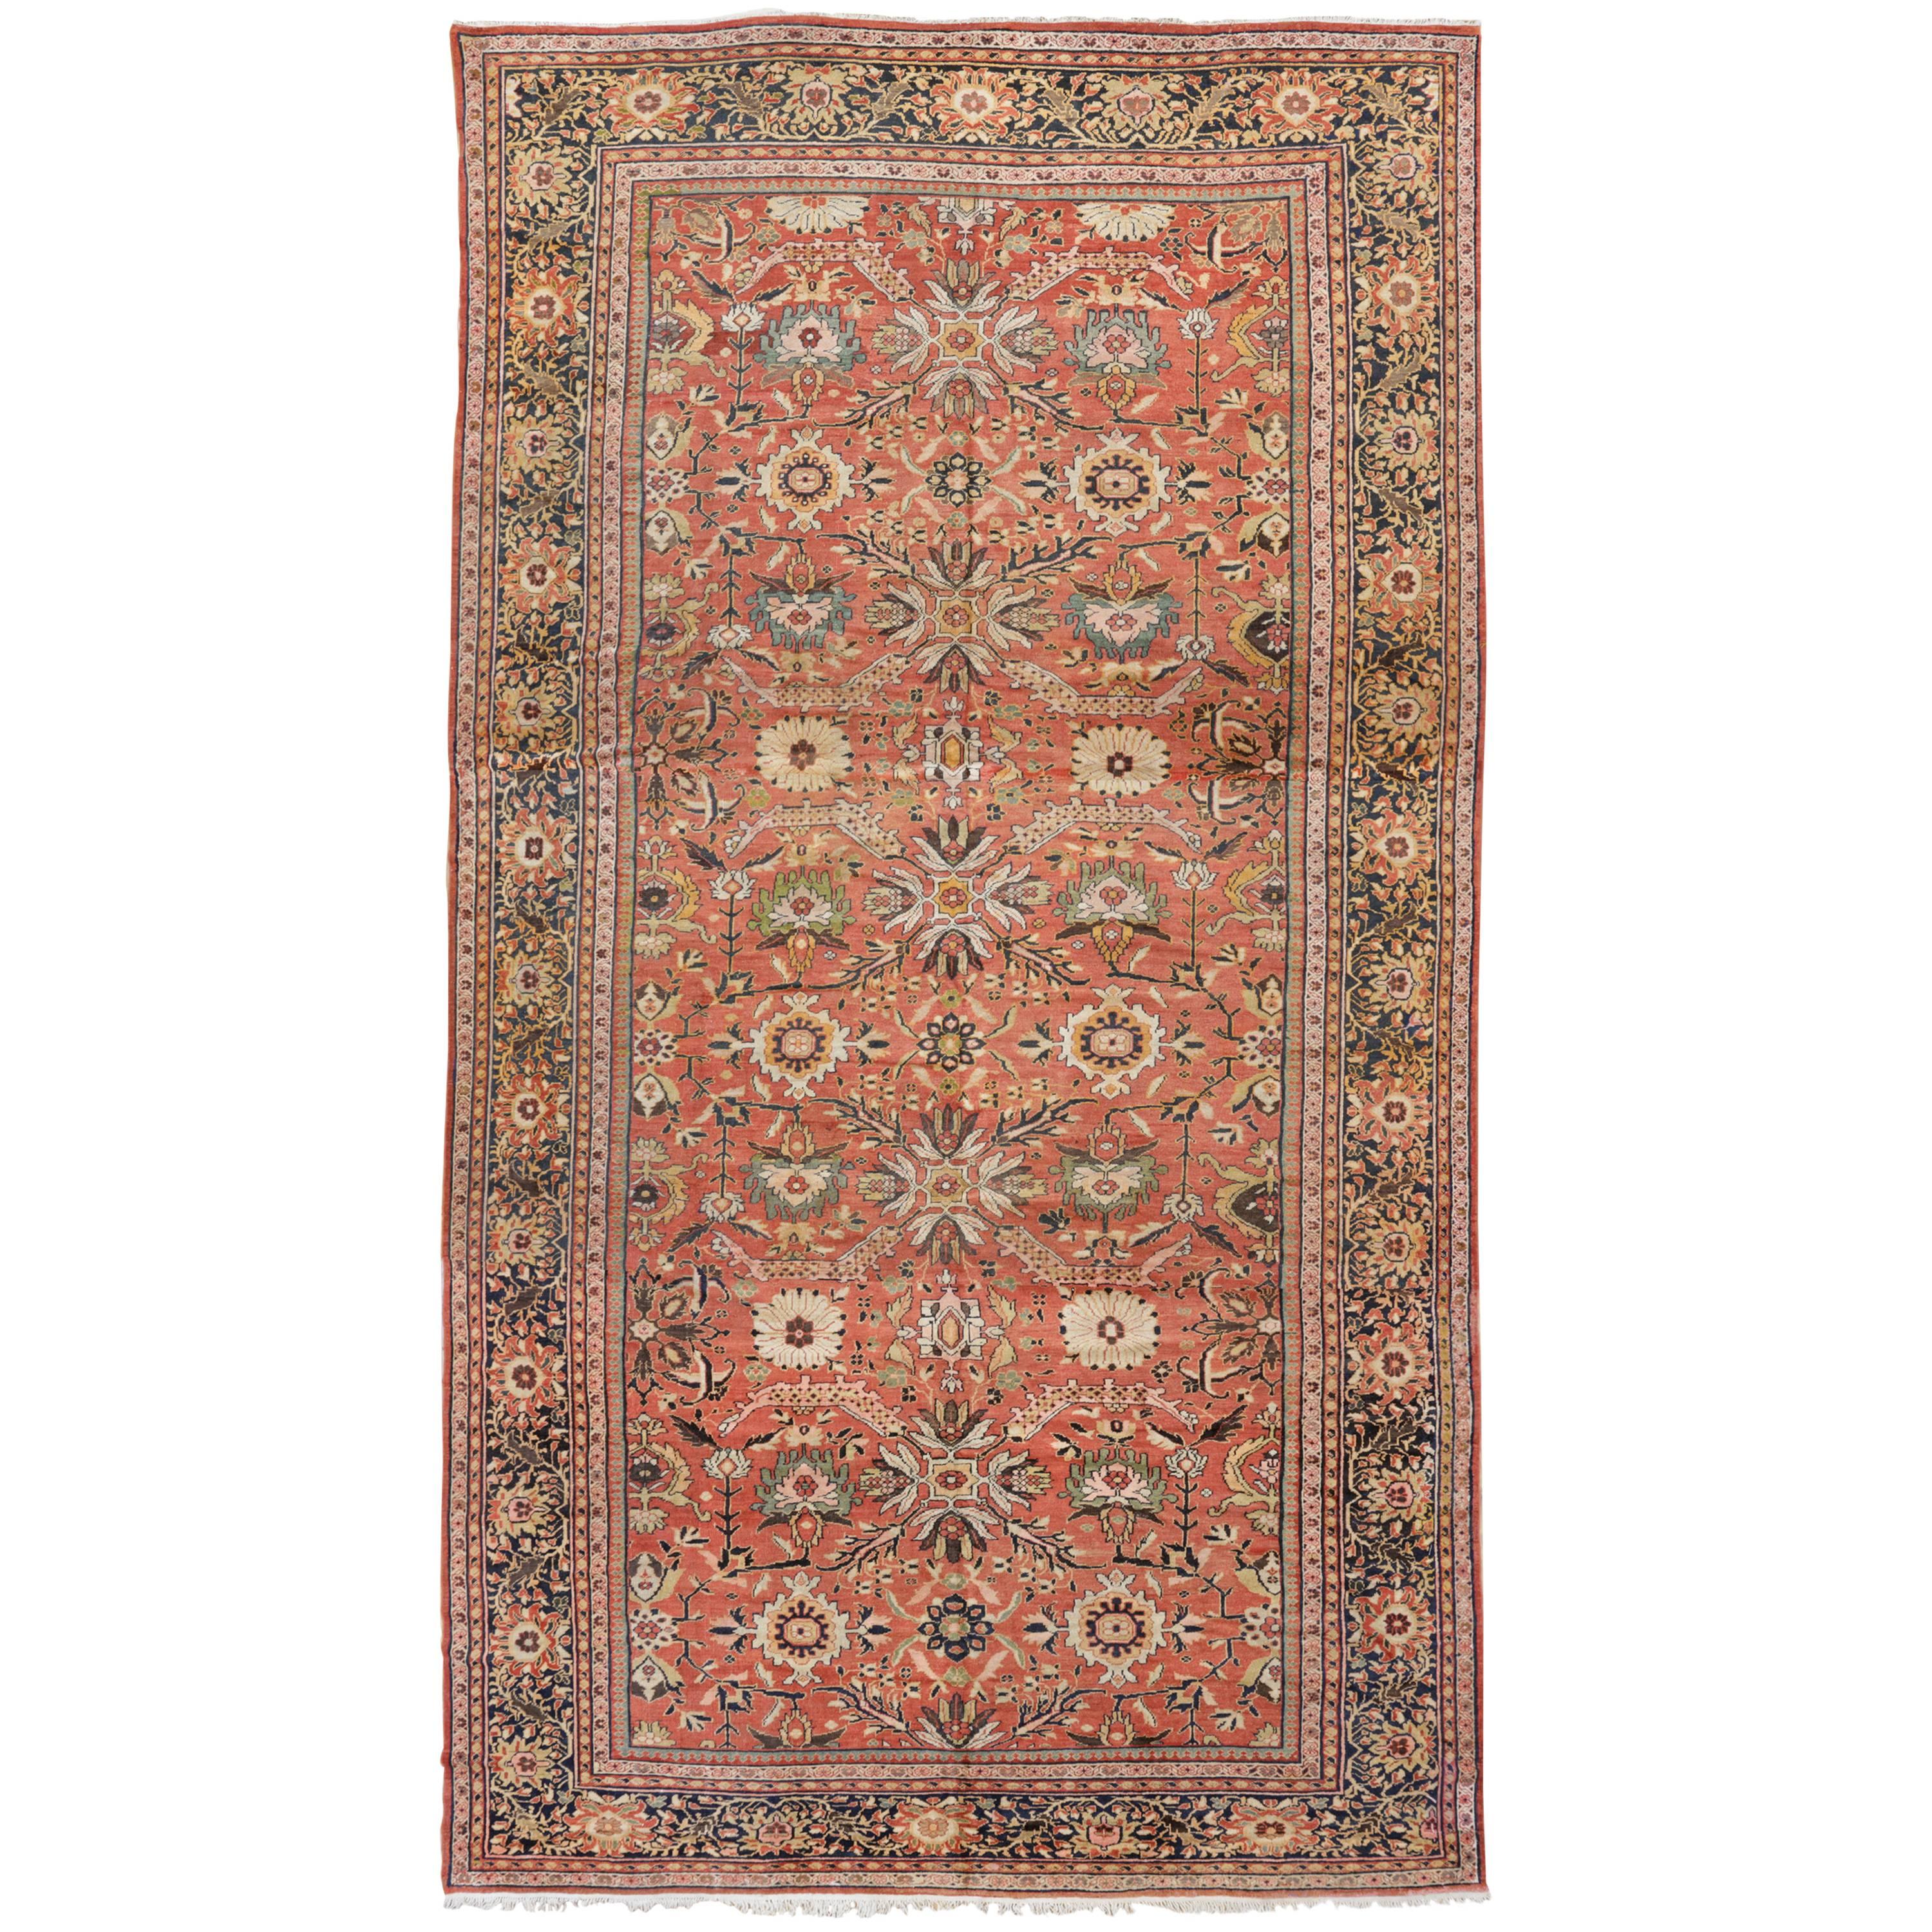 Antique Persian Sultanabad Carpet, Handmade Oriental Rug, Navy Blue, Terracotta